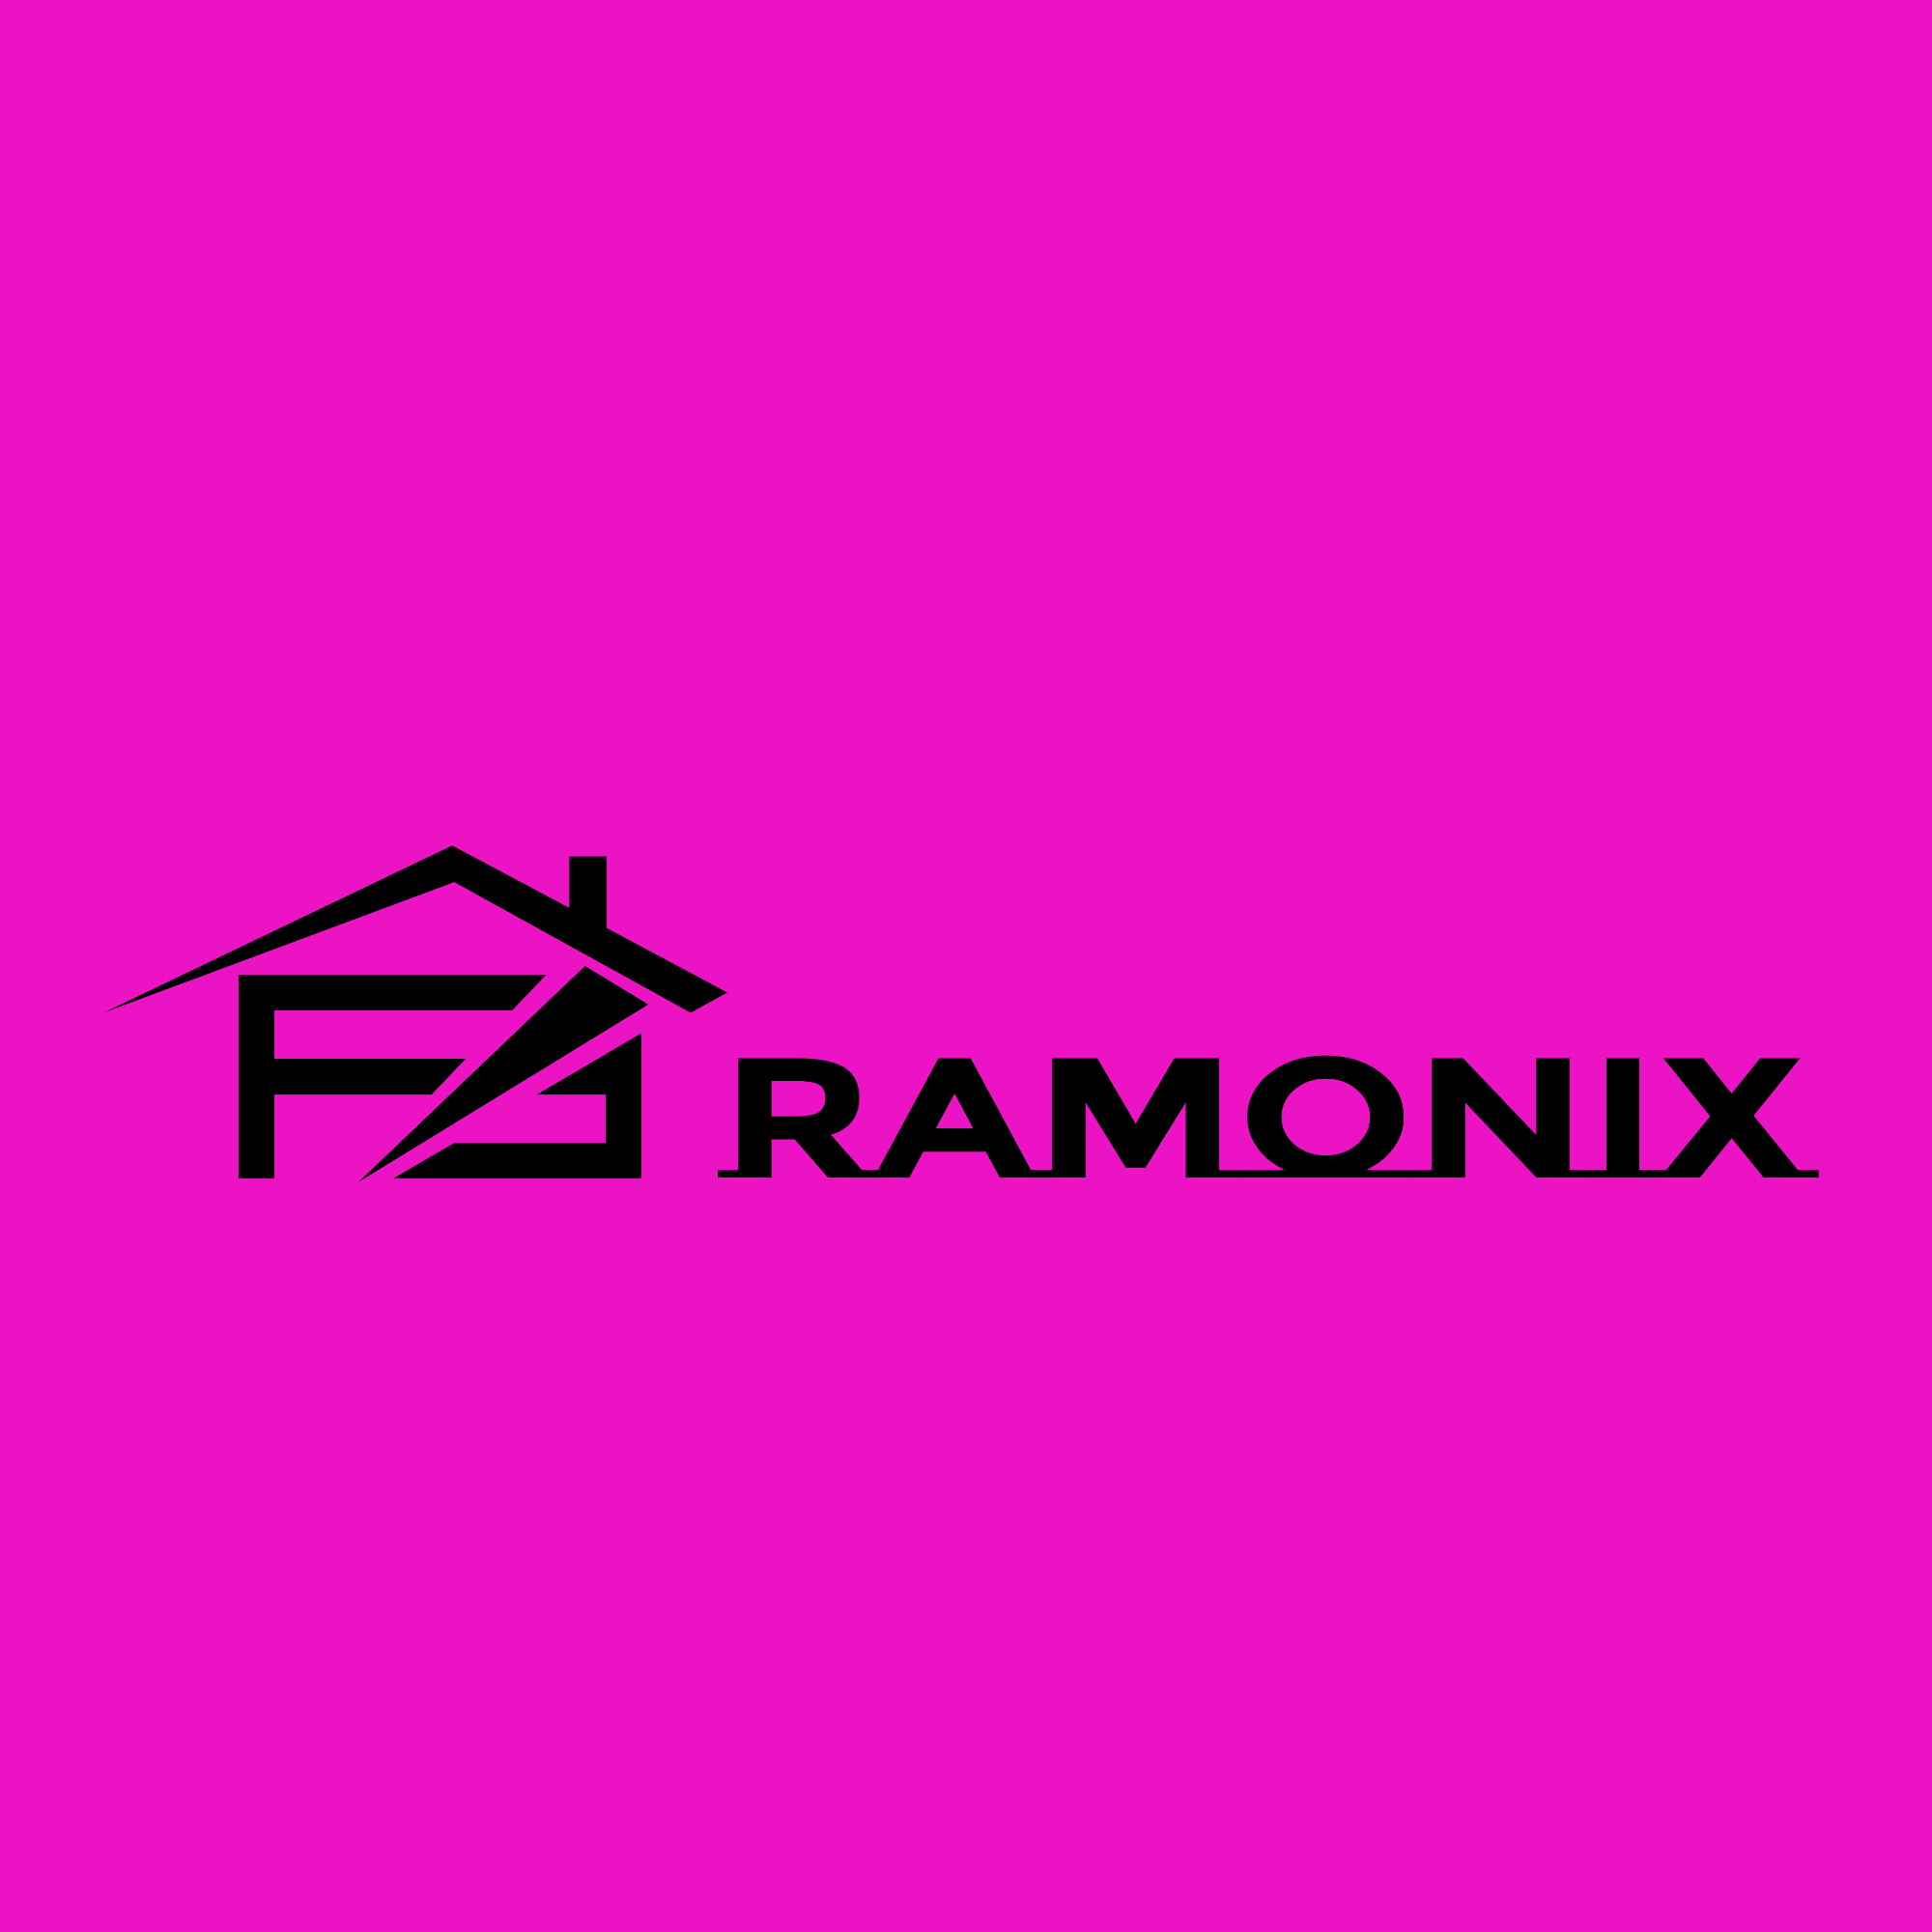 Ramonix